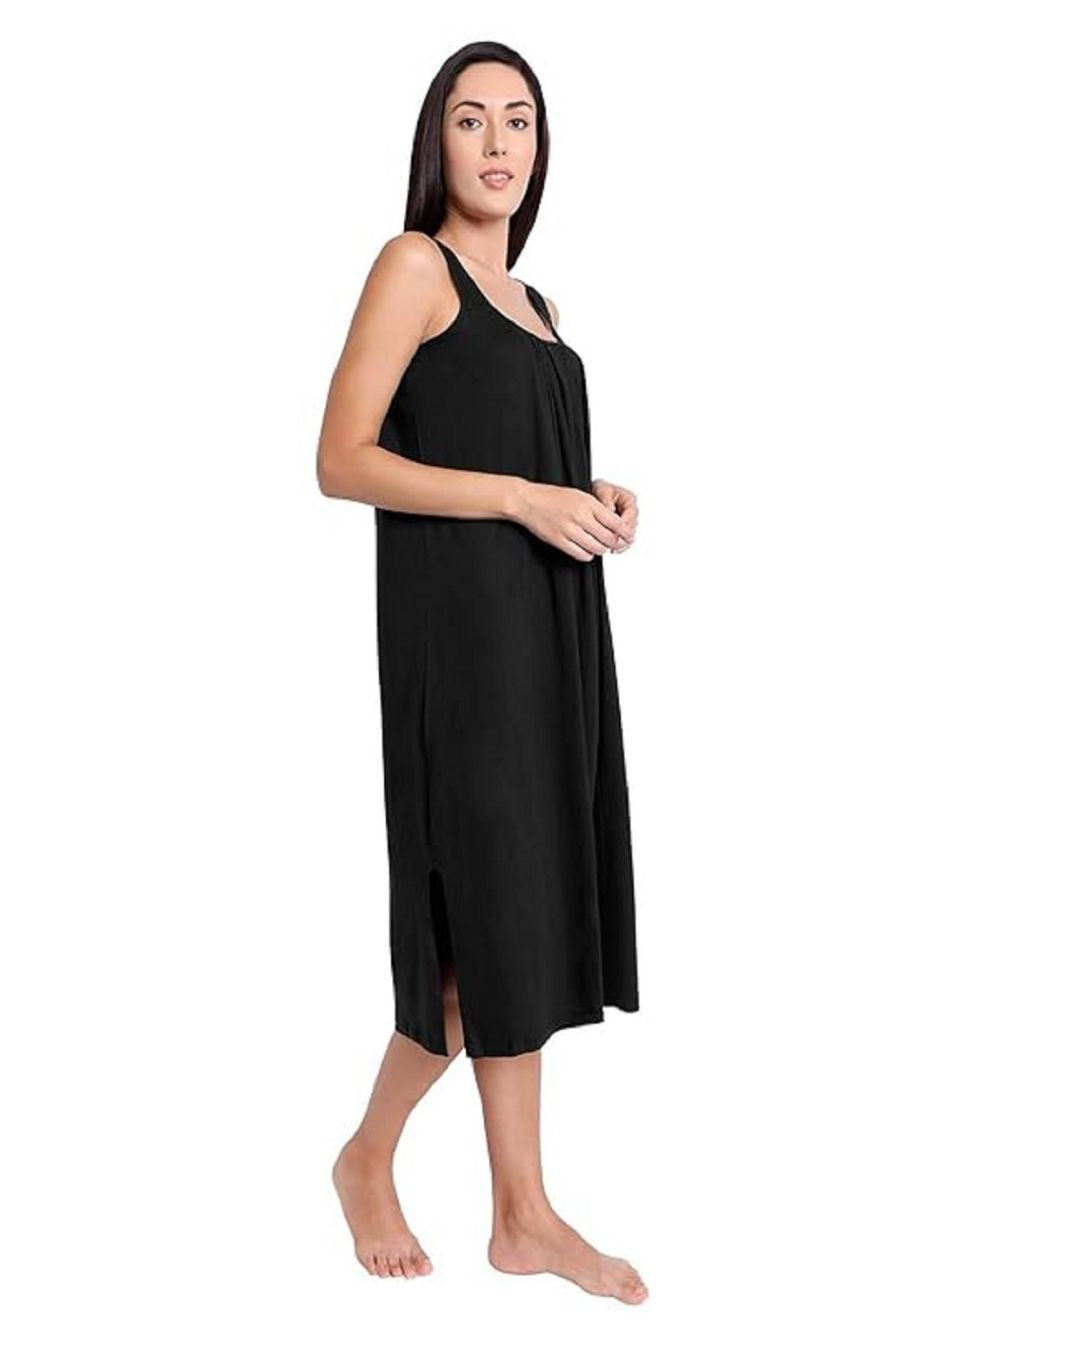 TWGE Cotton Full Length Camisole for Women - Long Innerwear - Color Black